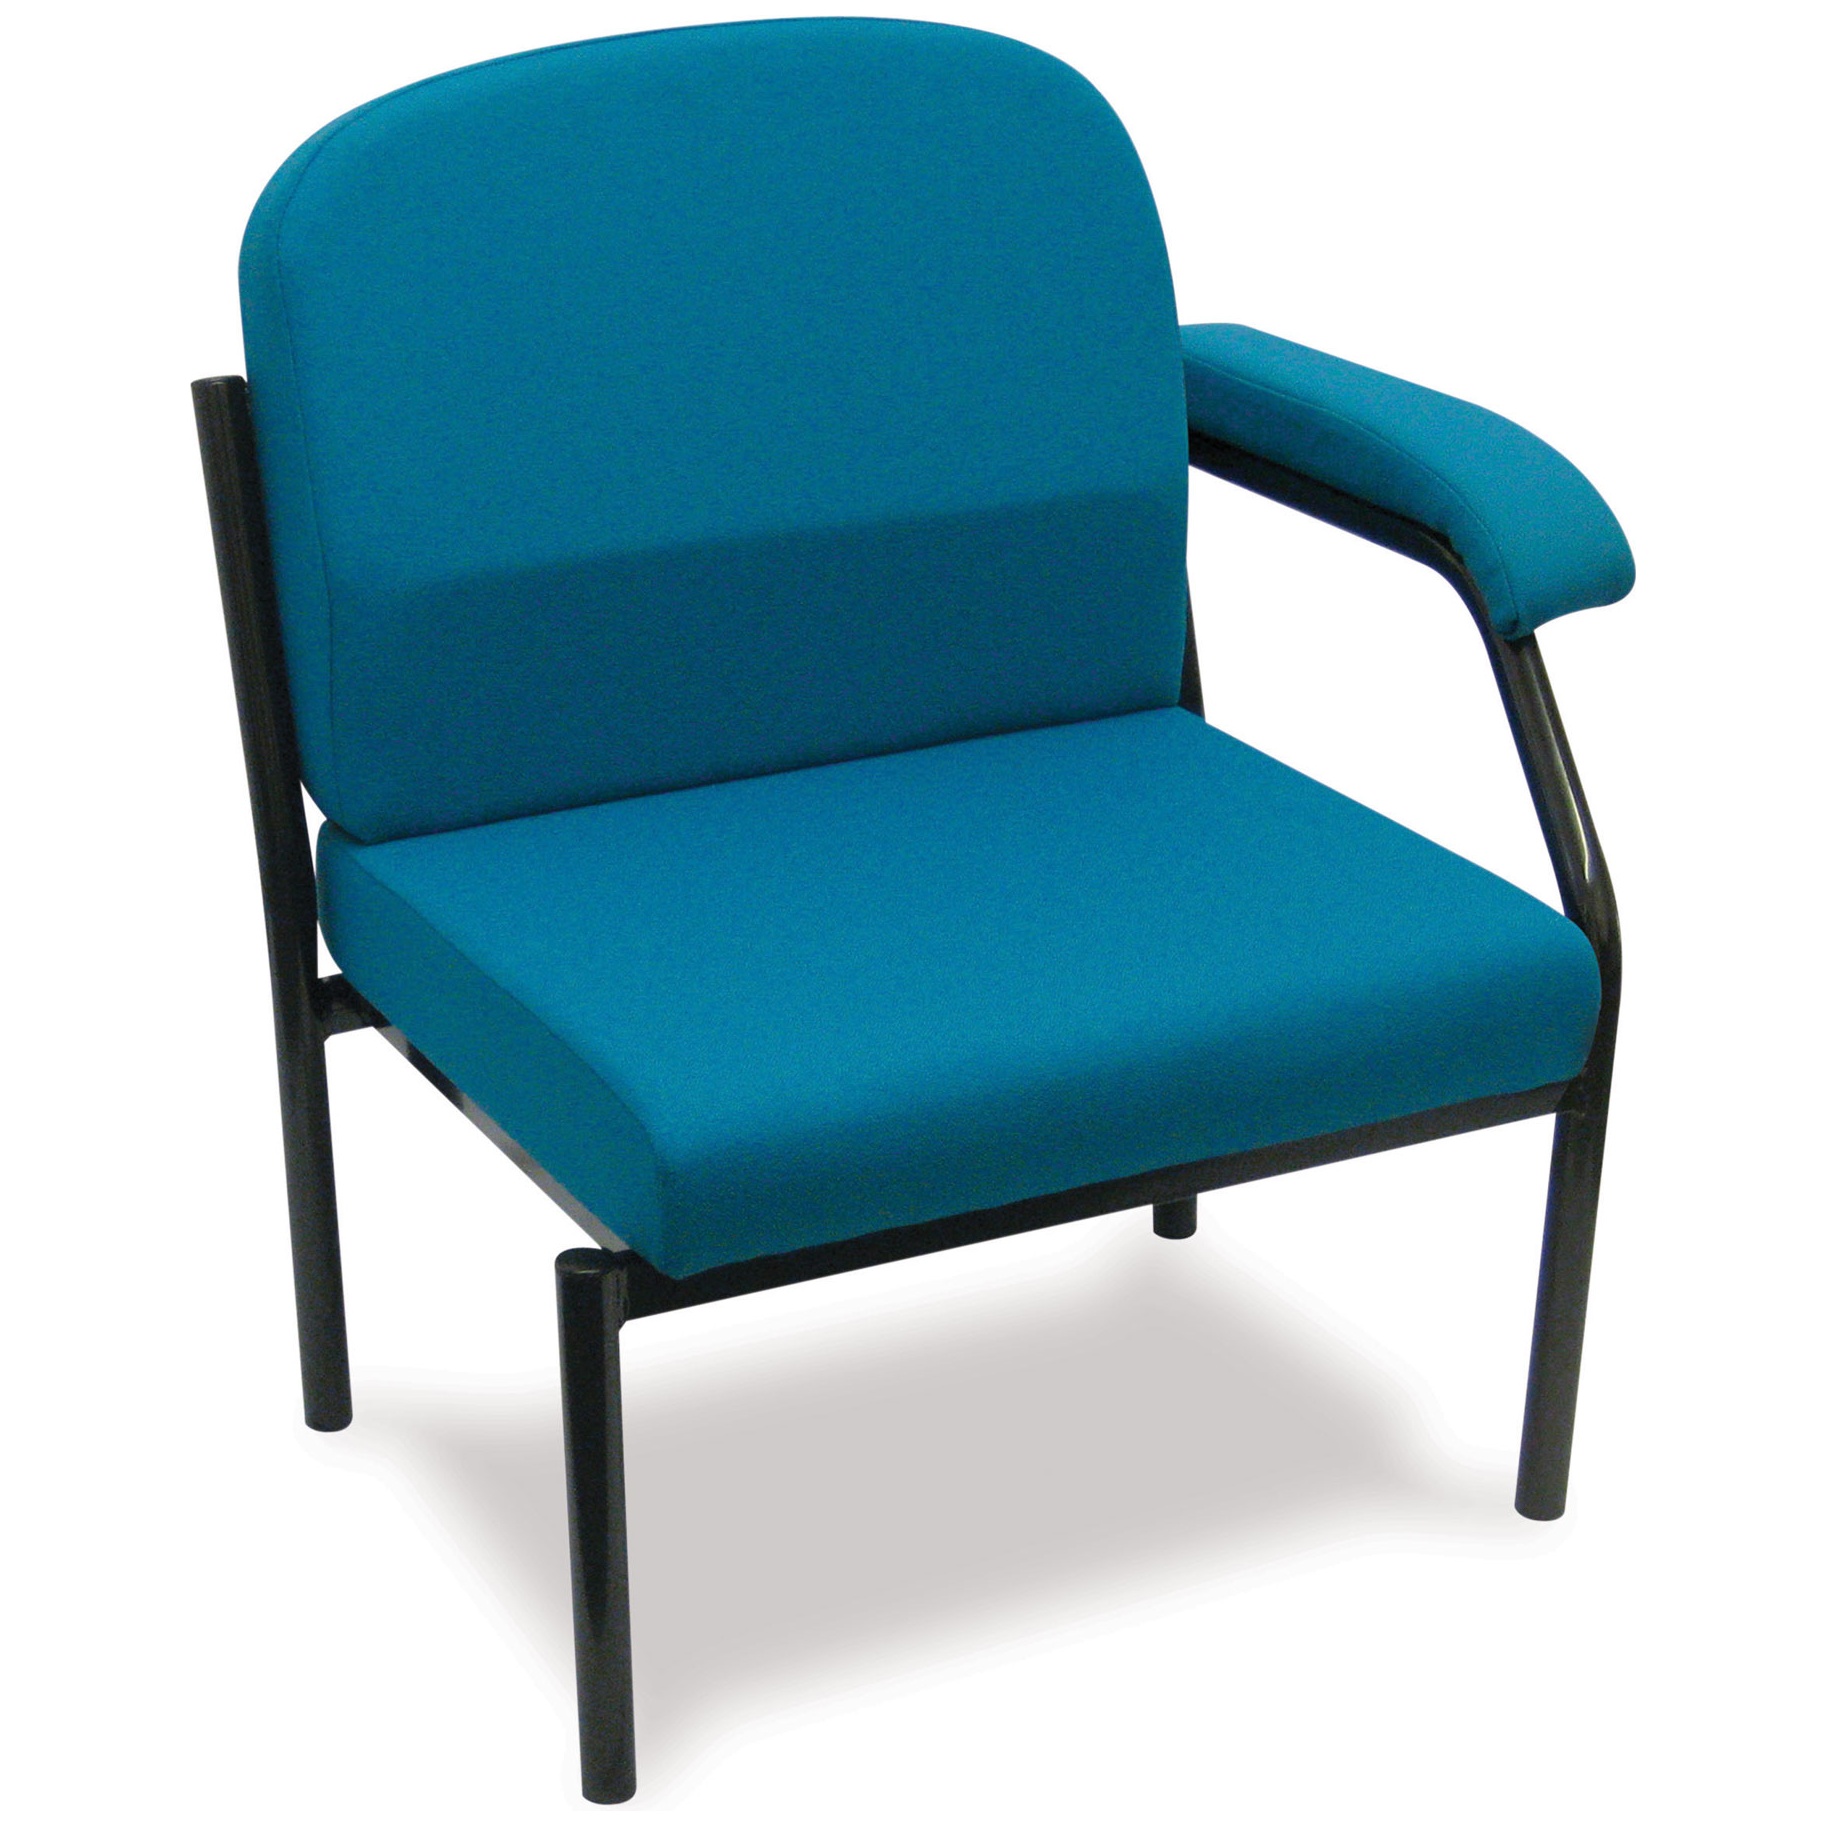 Easy Extra Heavy Duty Single Arm Reception Chair | Reception Seating